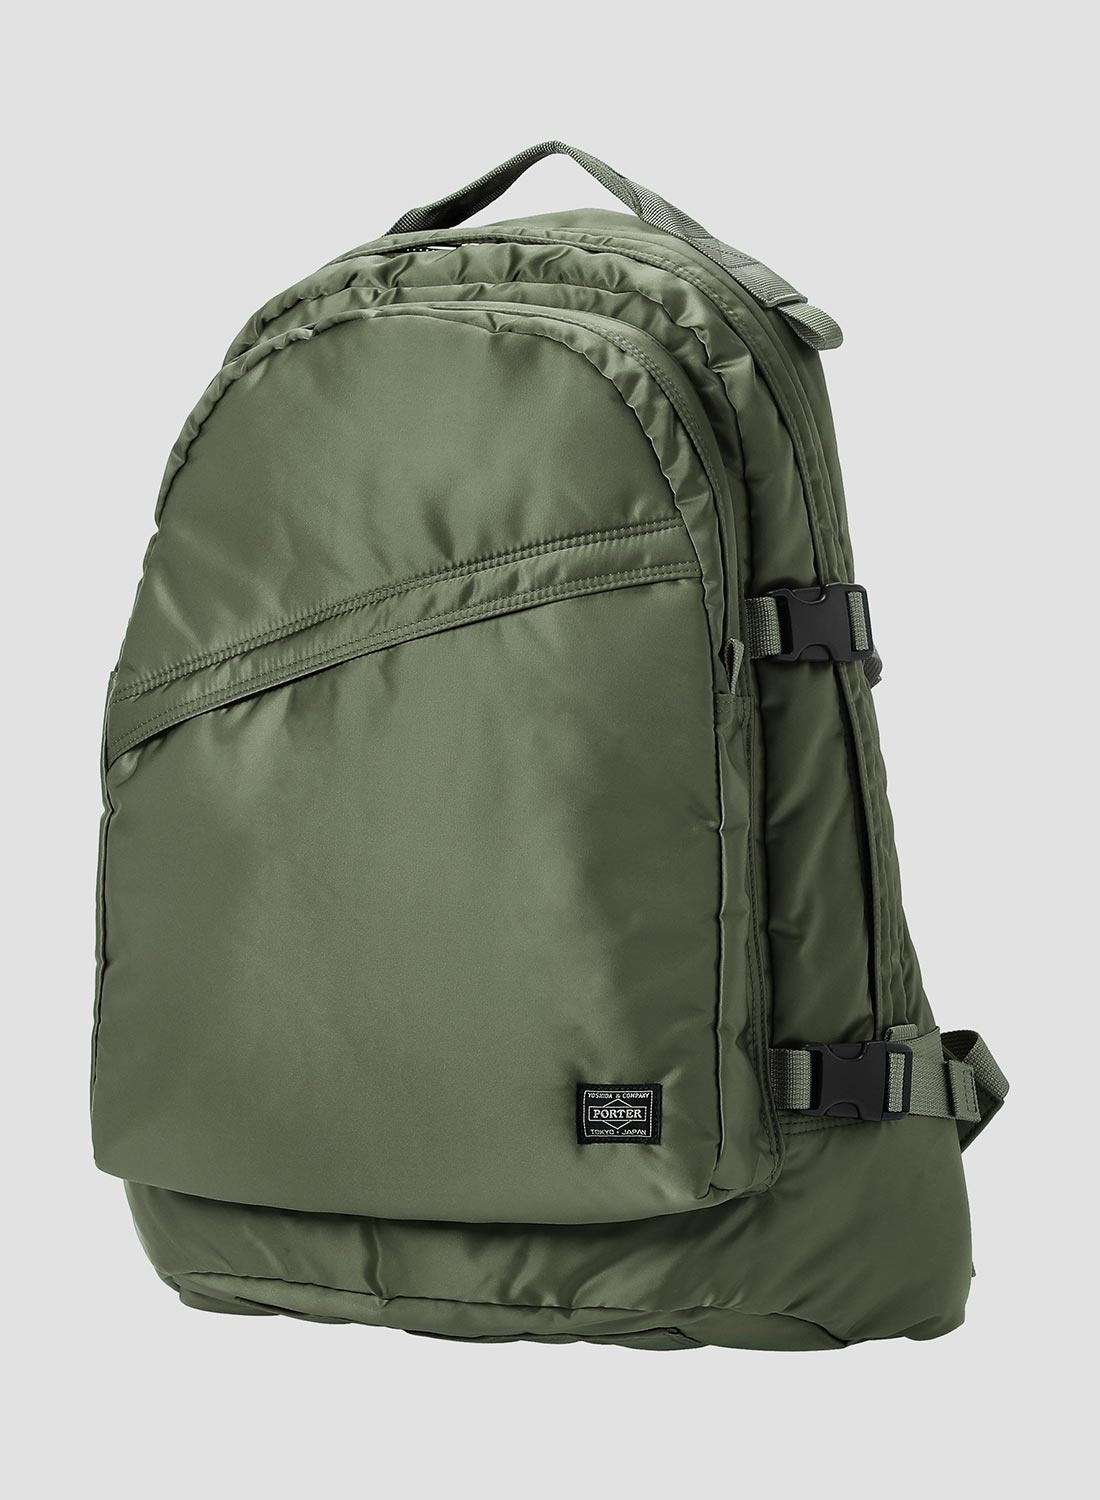 Porter-Yoshida & Co Tanker Day Backpack in Sage Green - 3